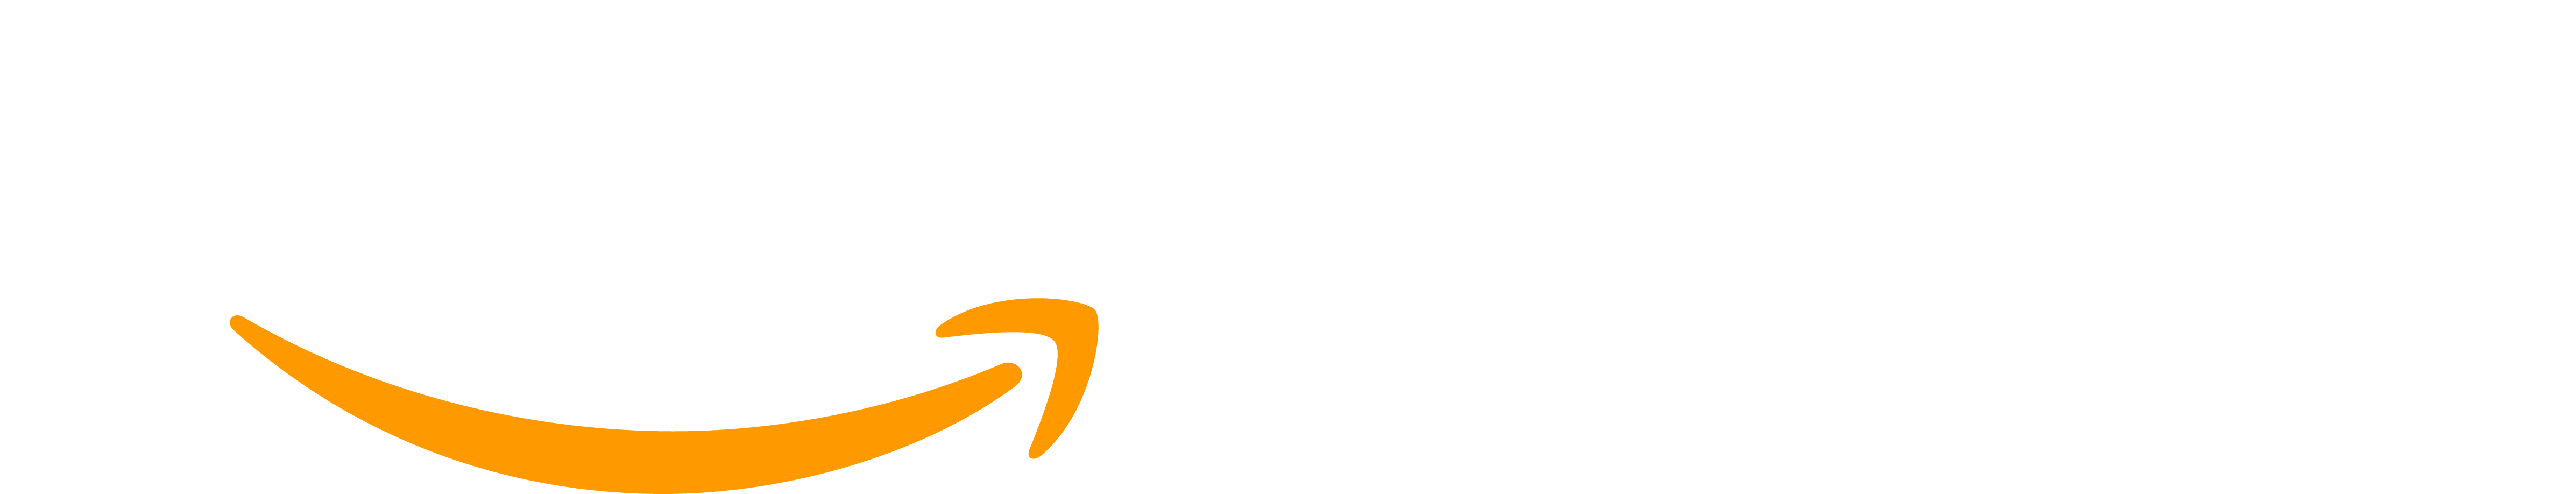 Logo AmazonPay pagamento sicuro